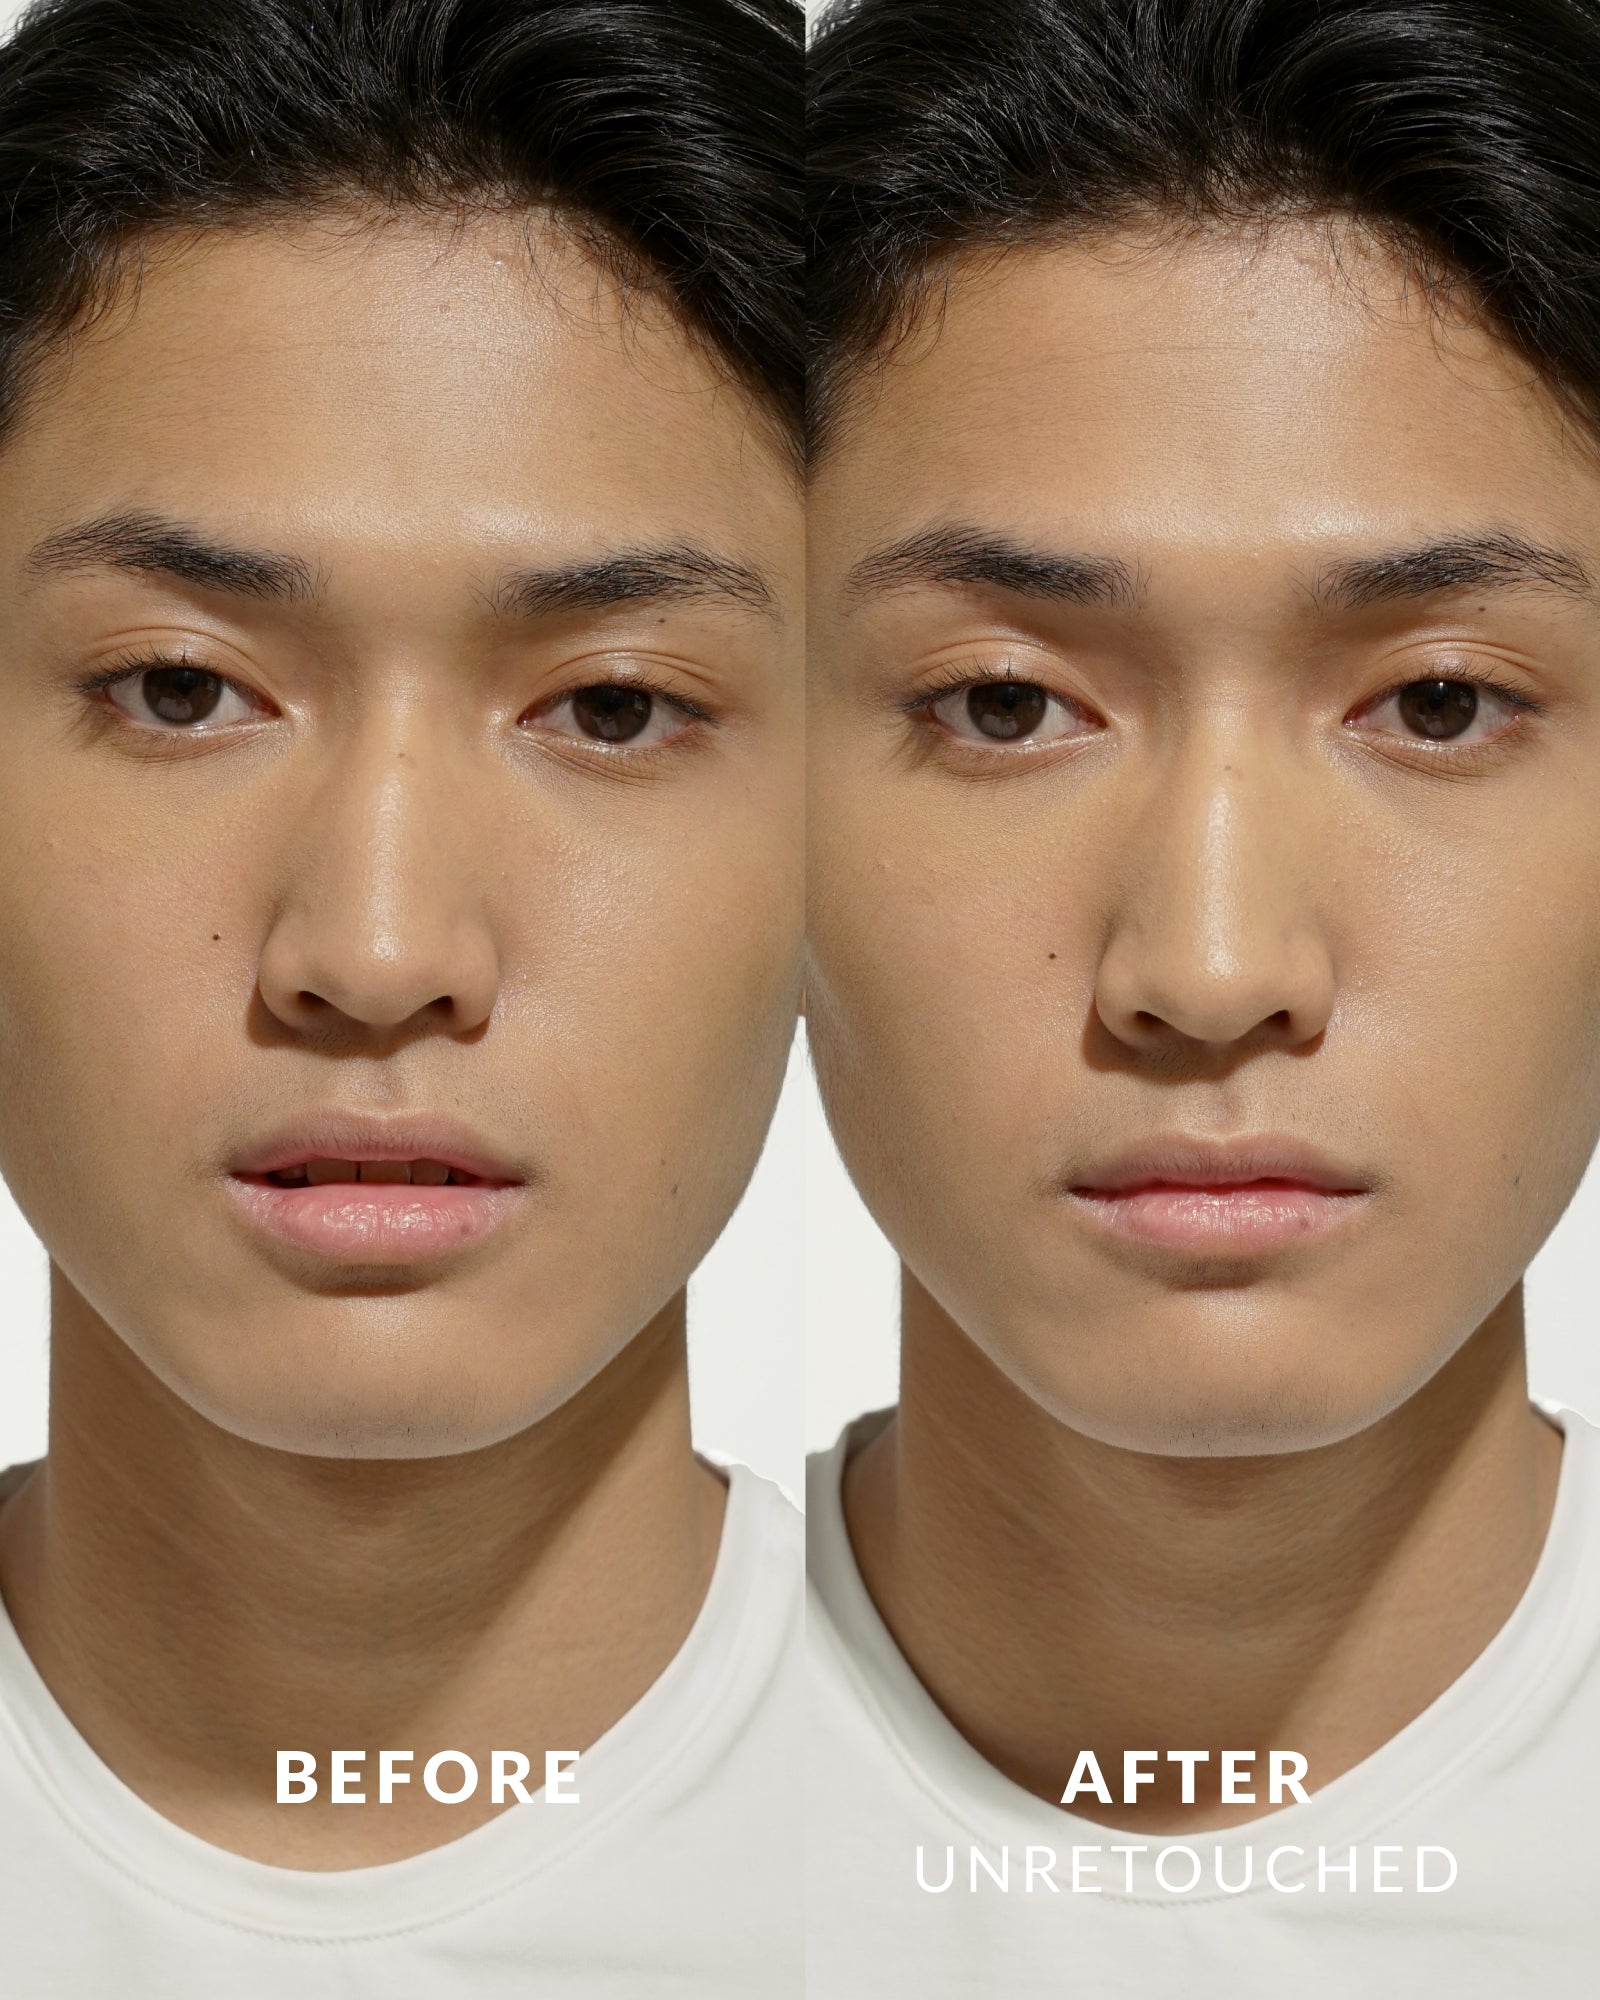 BLP Beauty Face Concealer Tan Model